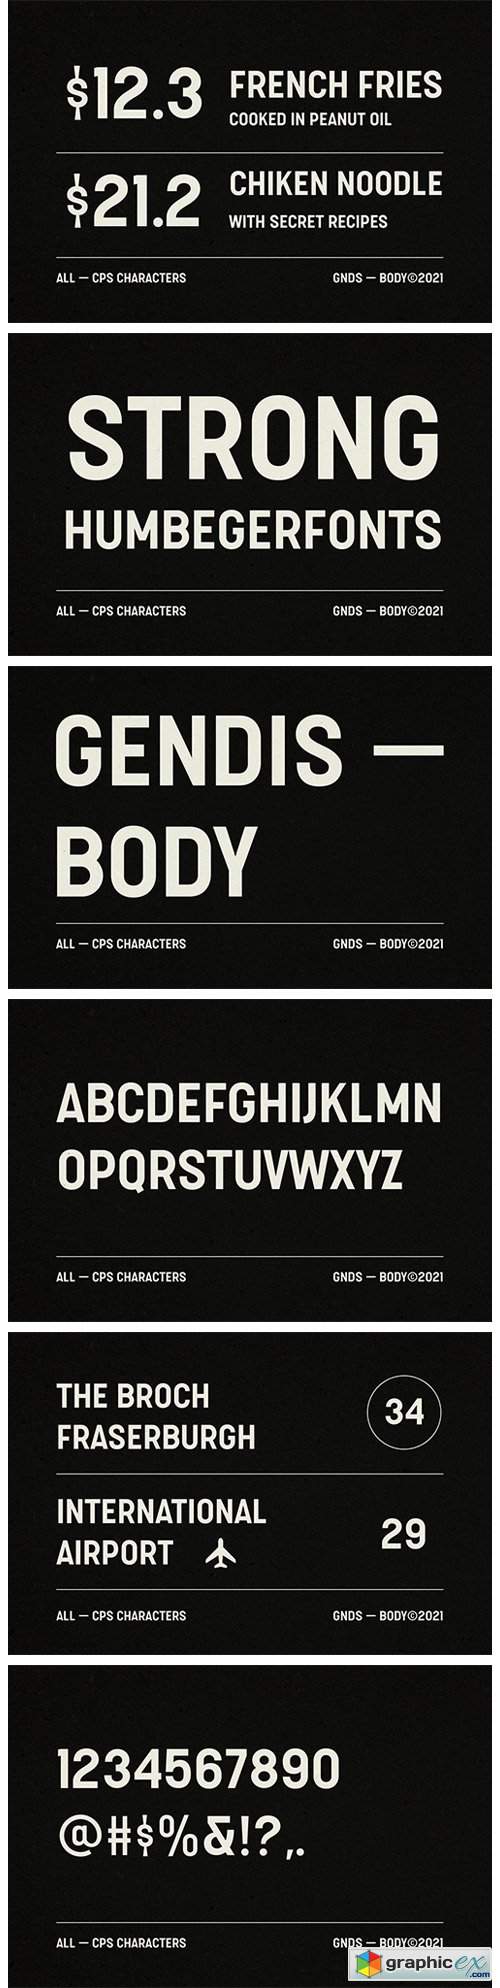 gendis body font free download